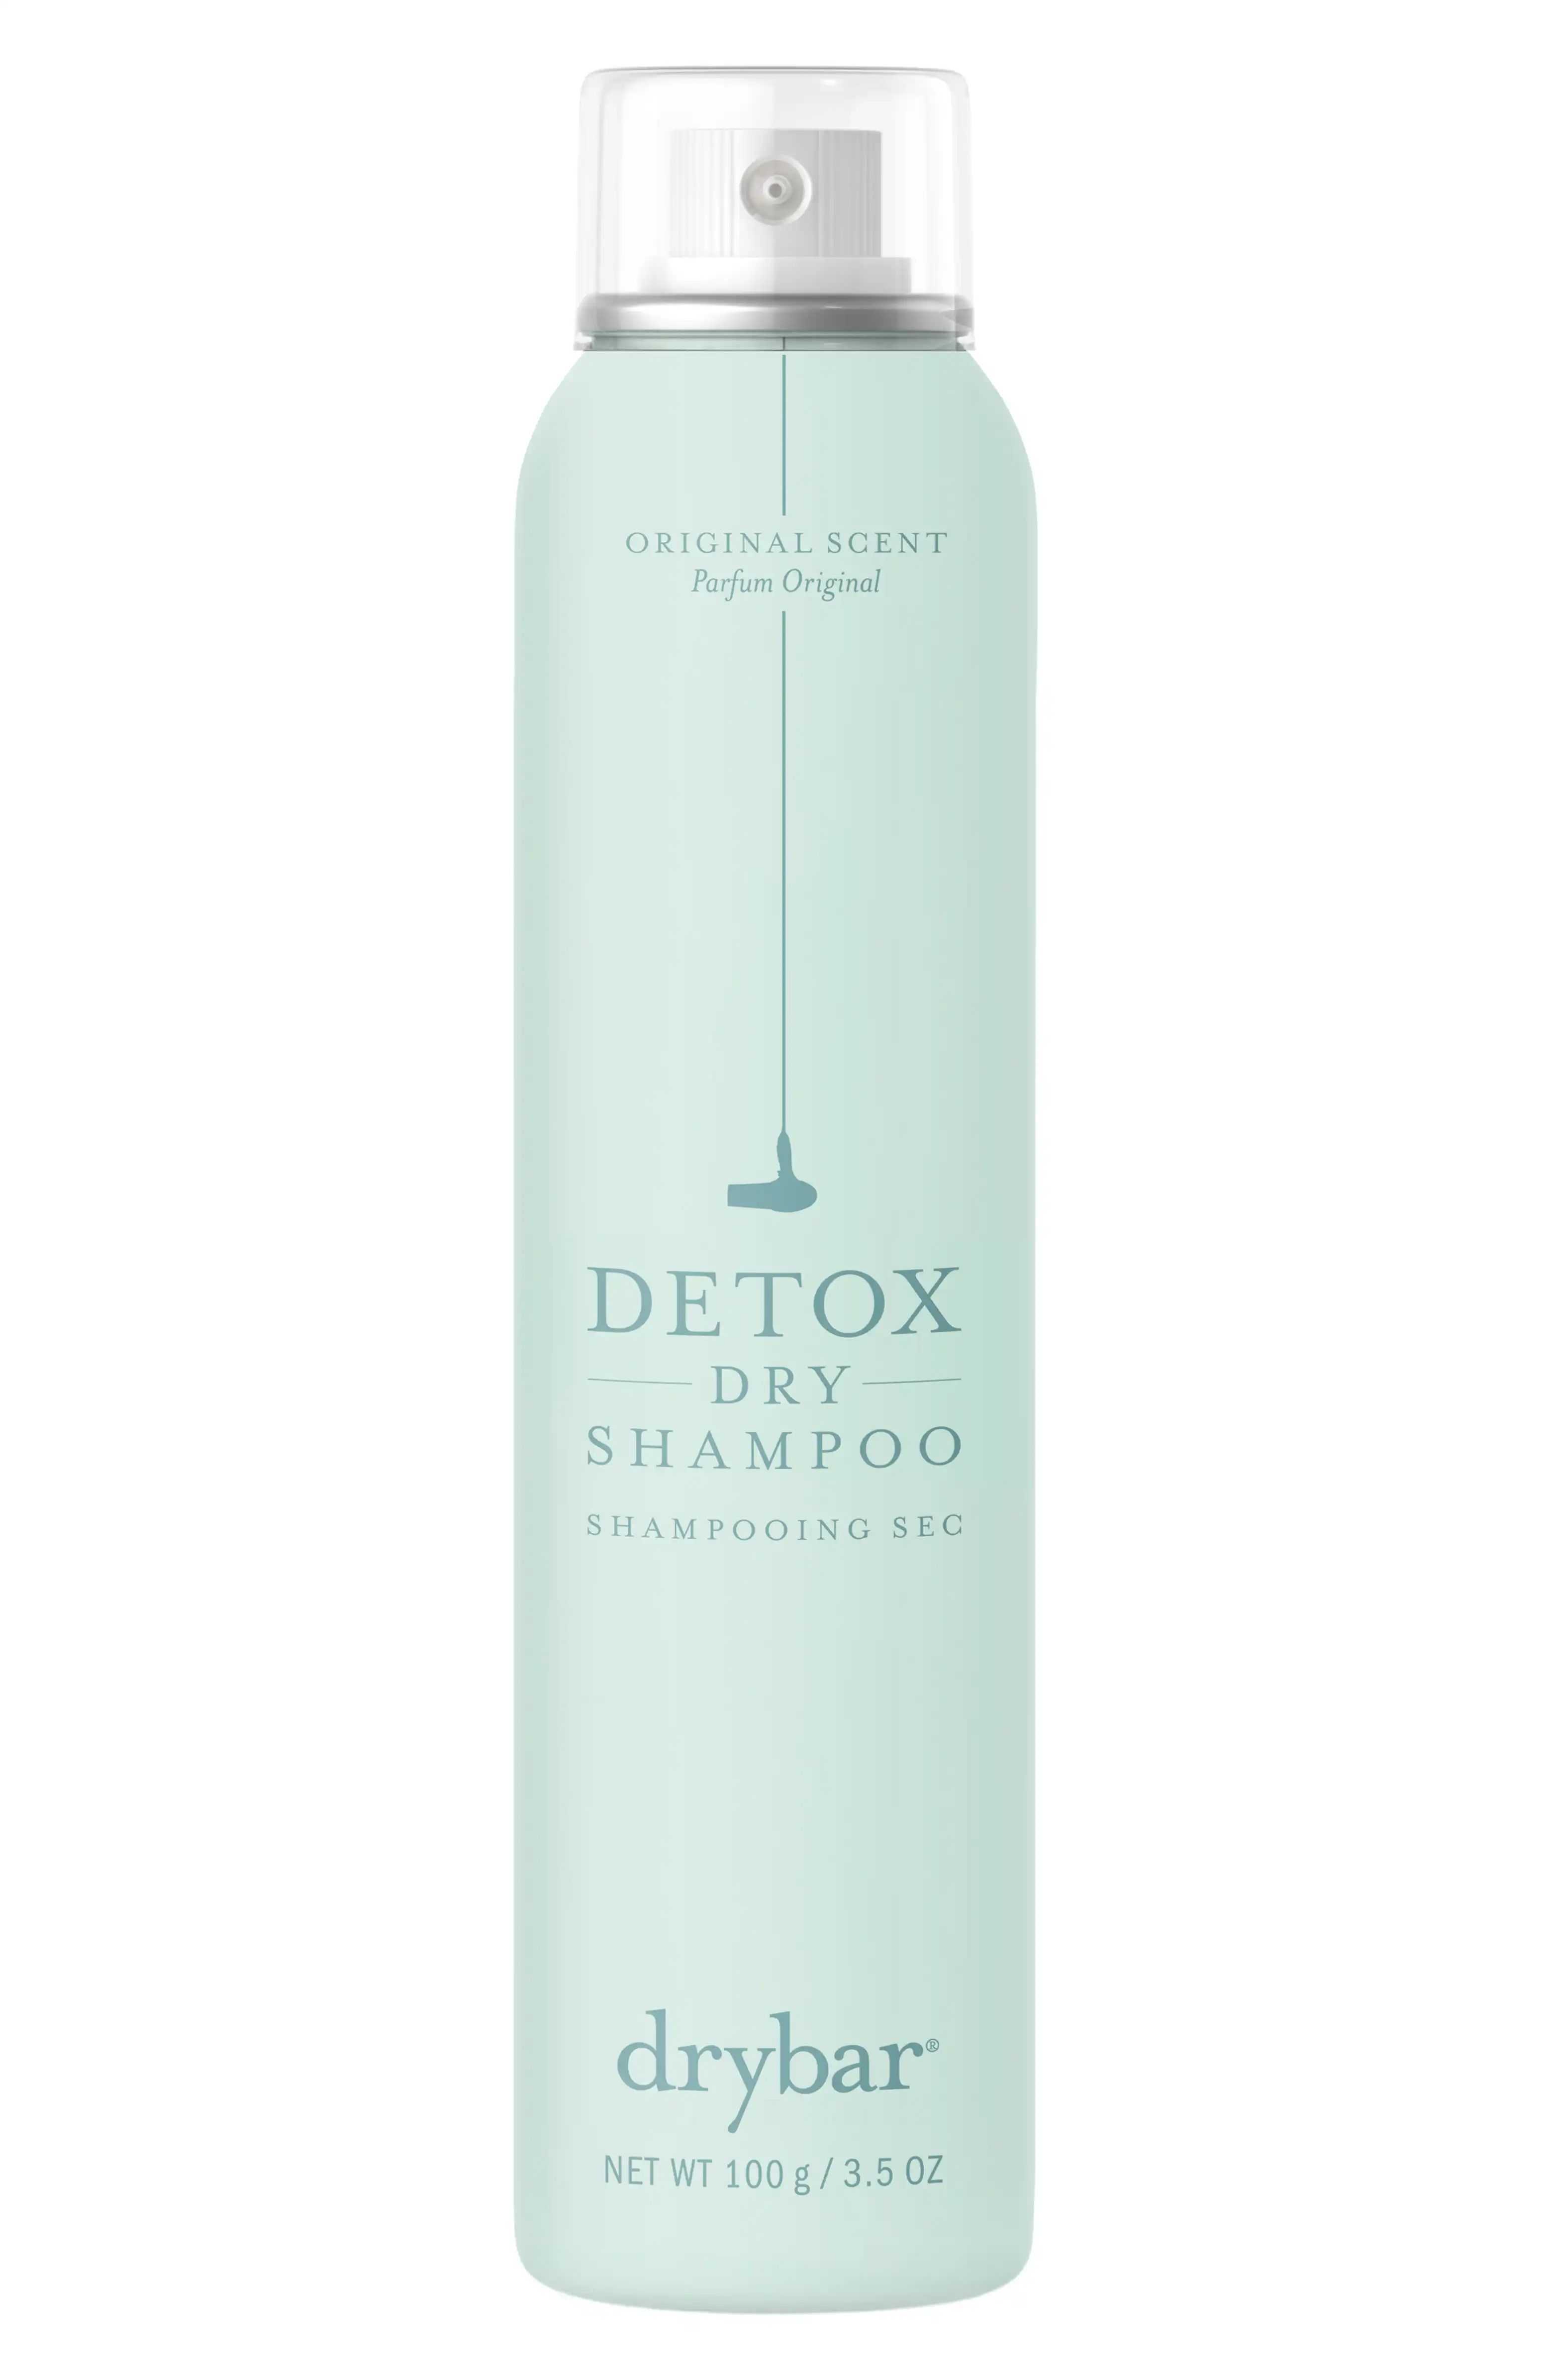 Detox Original Scent Dry Shampoo | Nordstrom